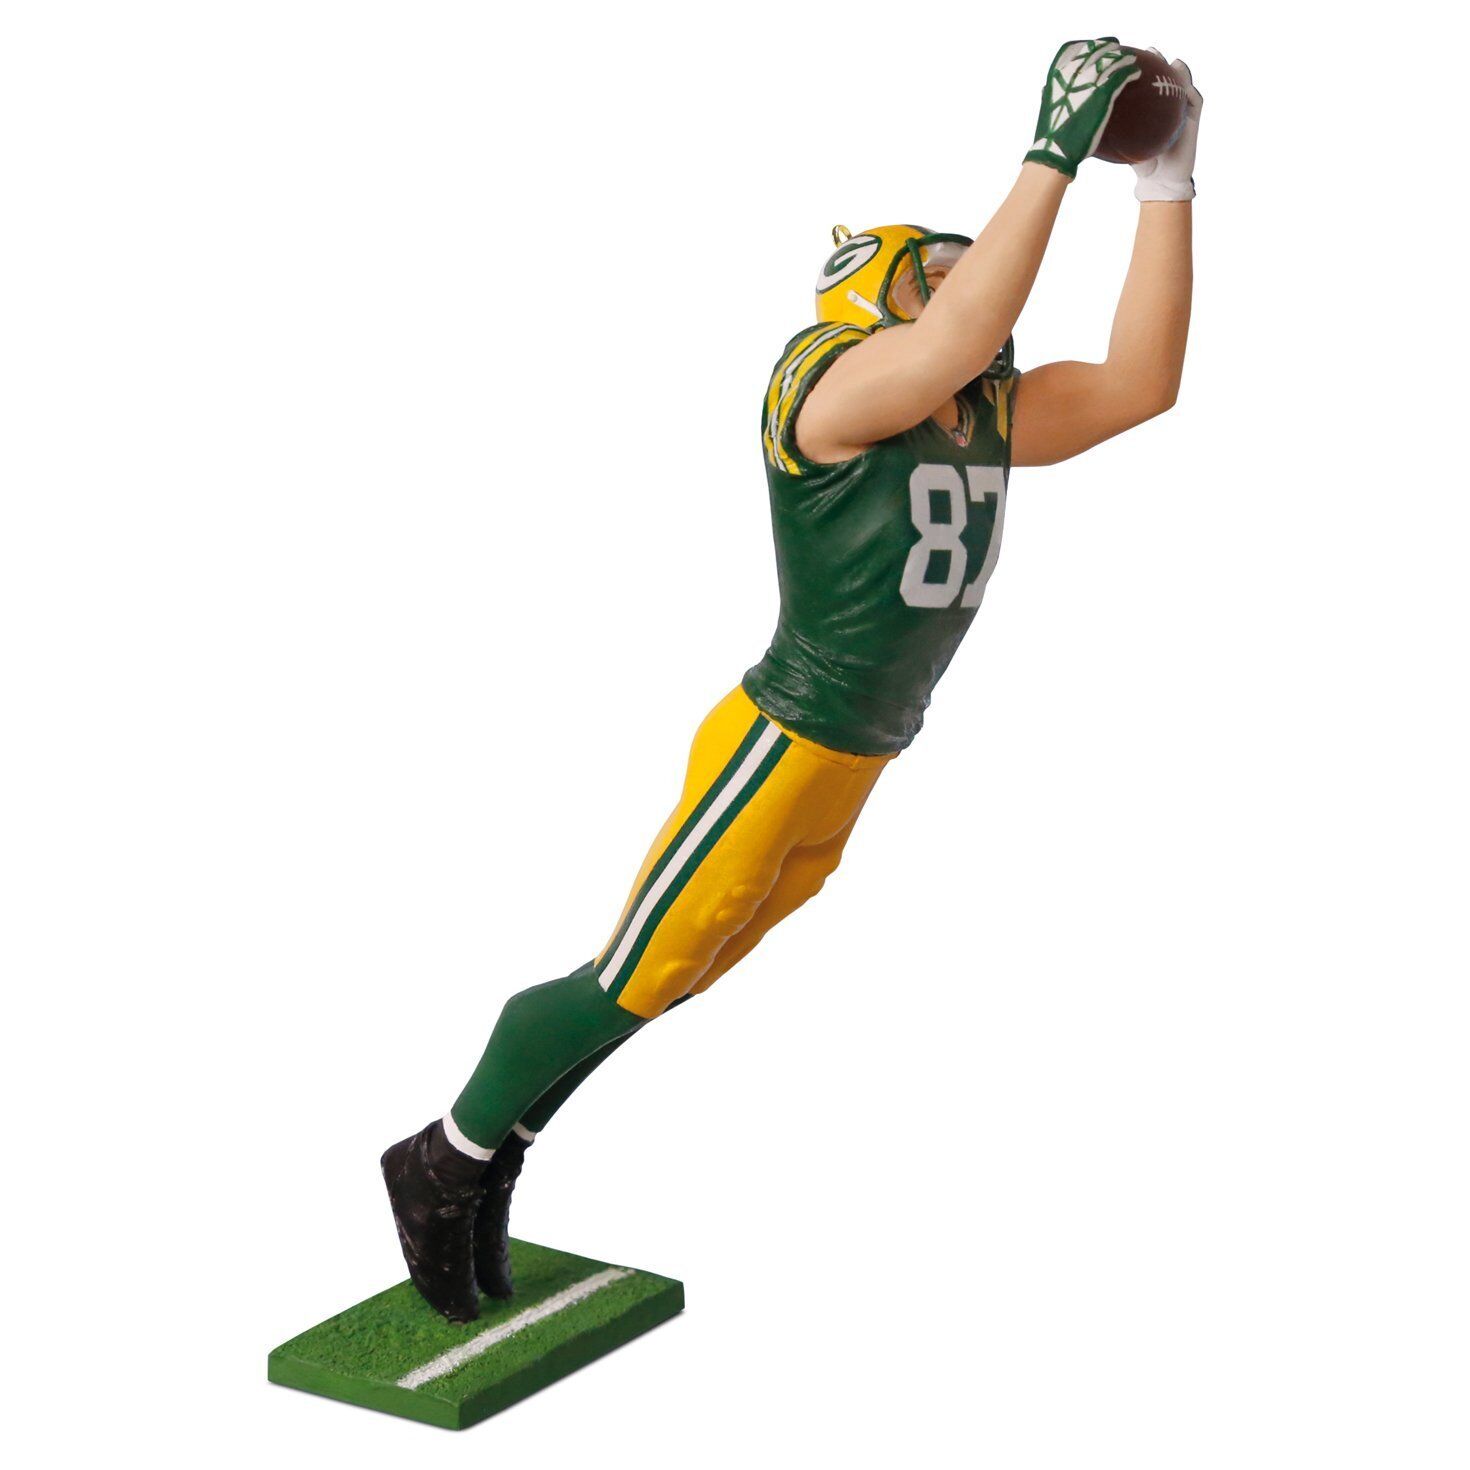 Jordy Nelson - 2016 Hallmark Ornament - Green Bay Packers - NFL - Football 